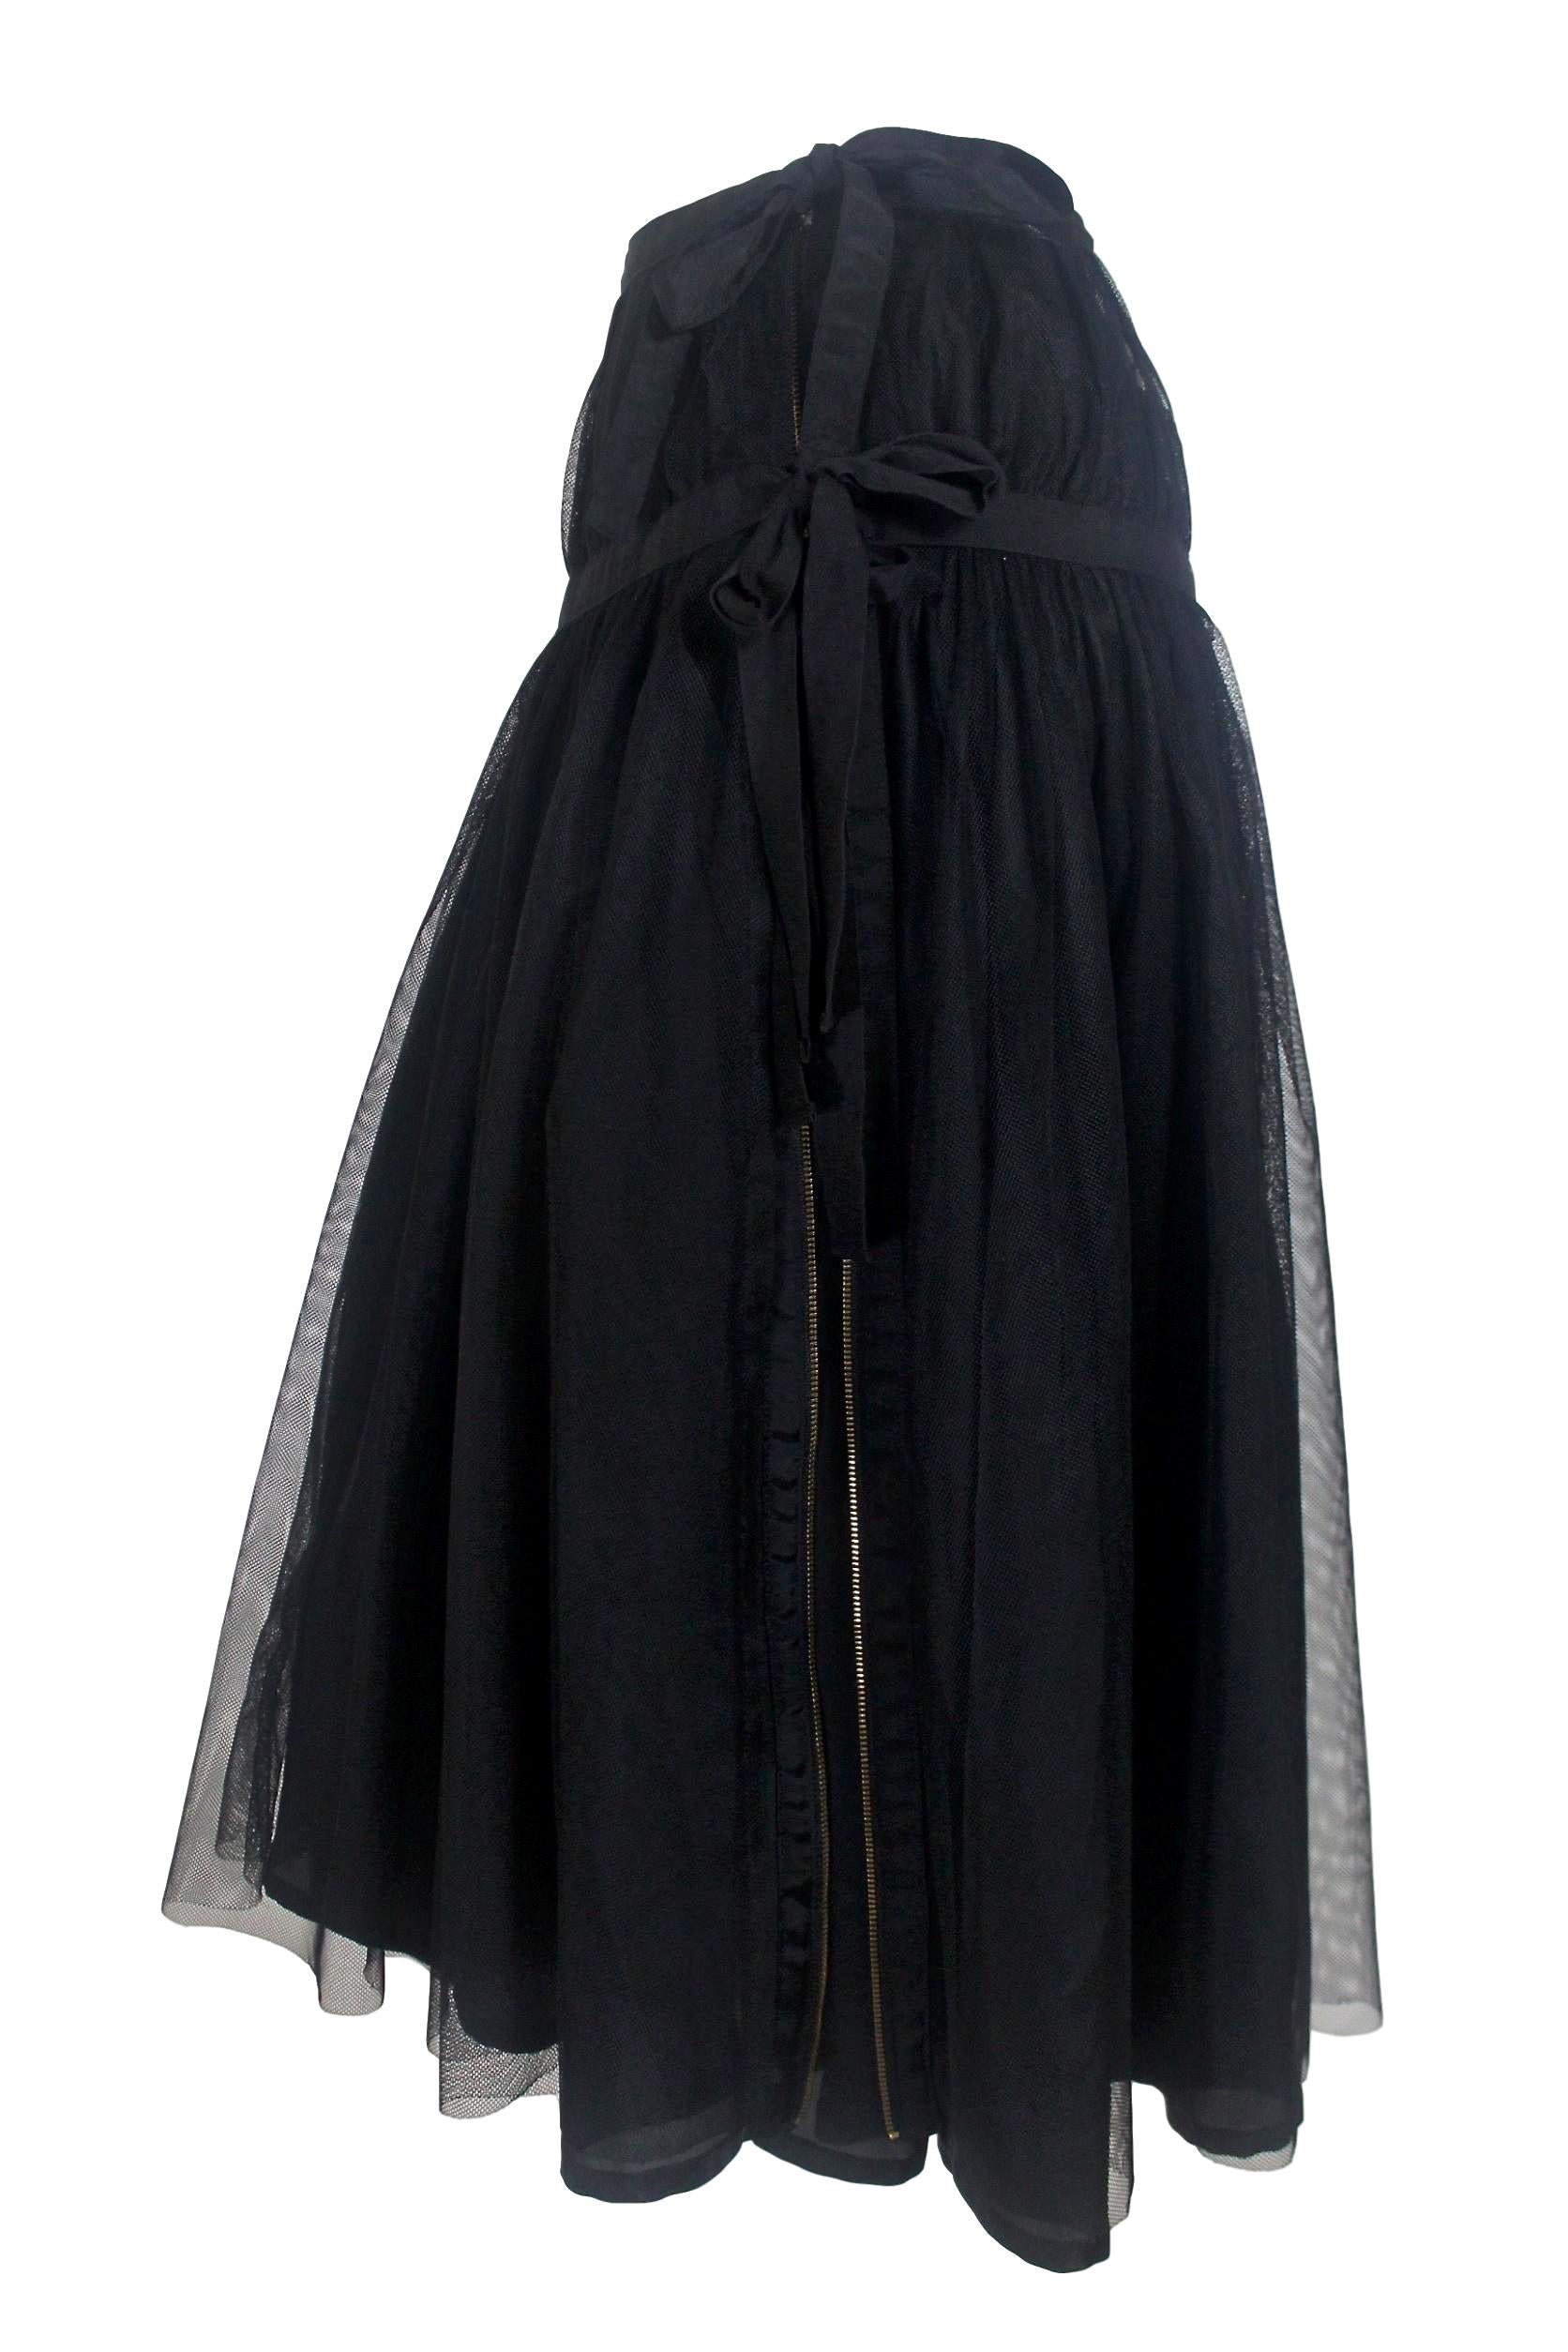 Comme des Garcons Tricot Double Layer Wrap Skirt 2007 For Sale 2